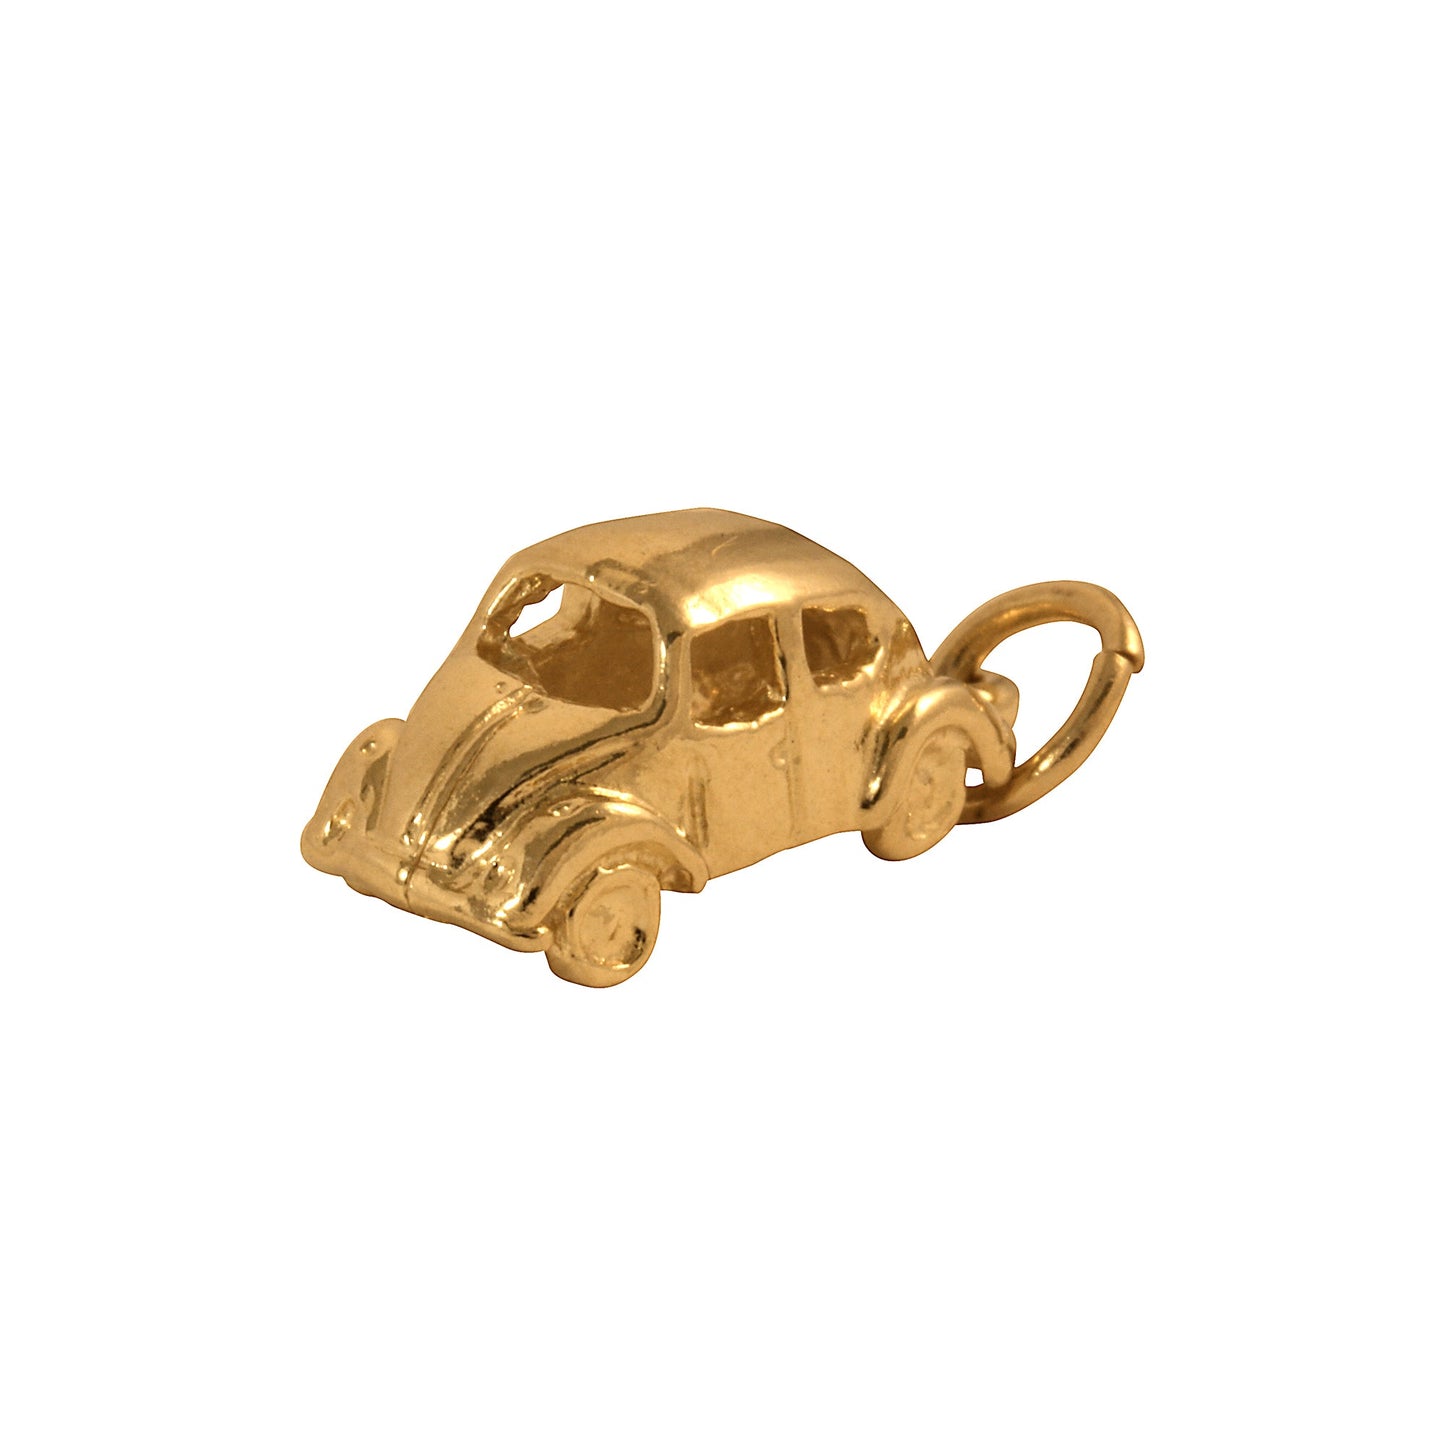 9ct Gold Beetle Charm